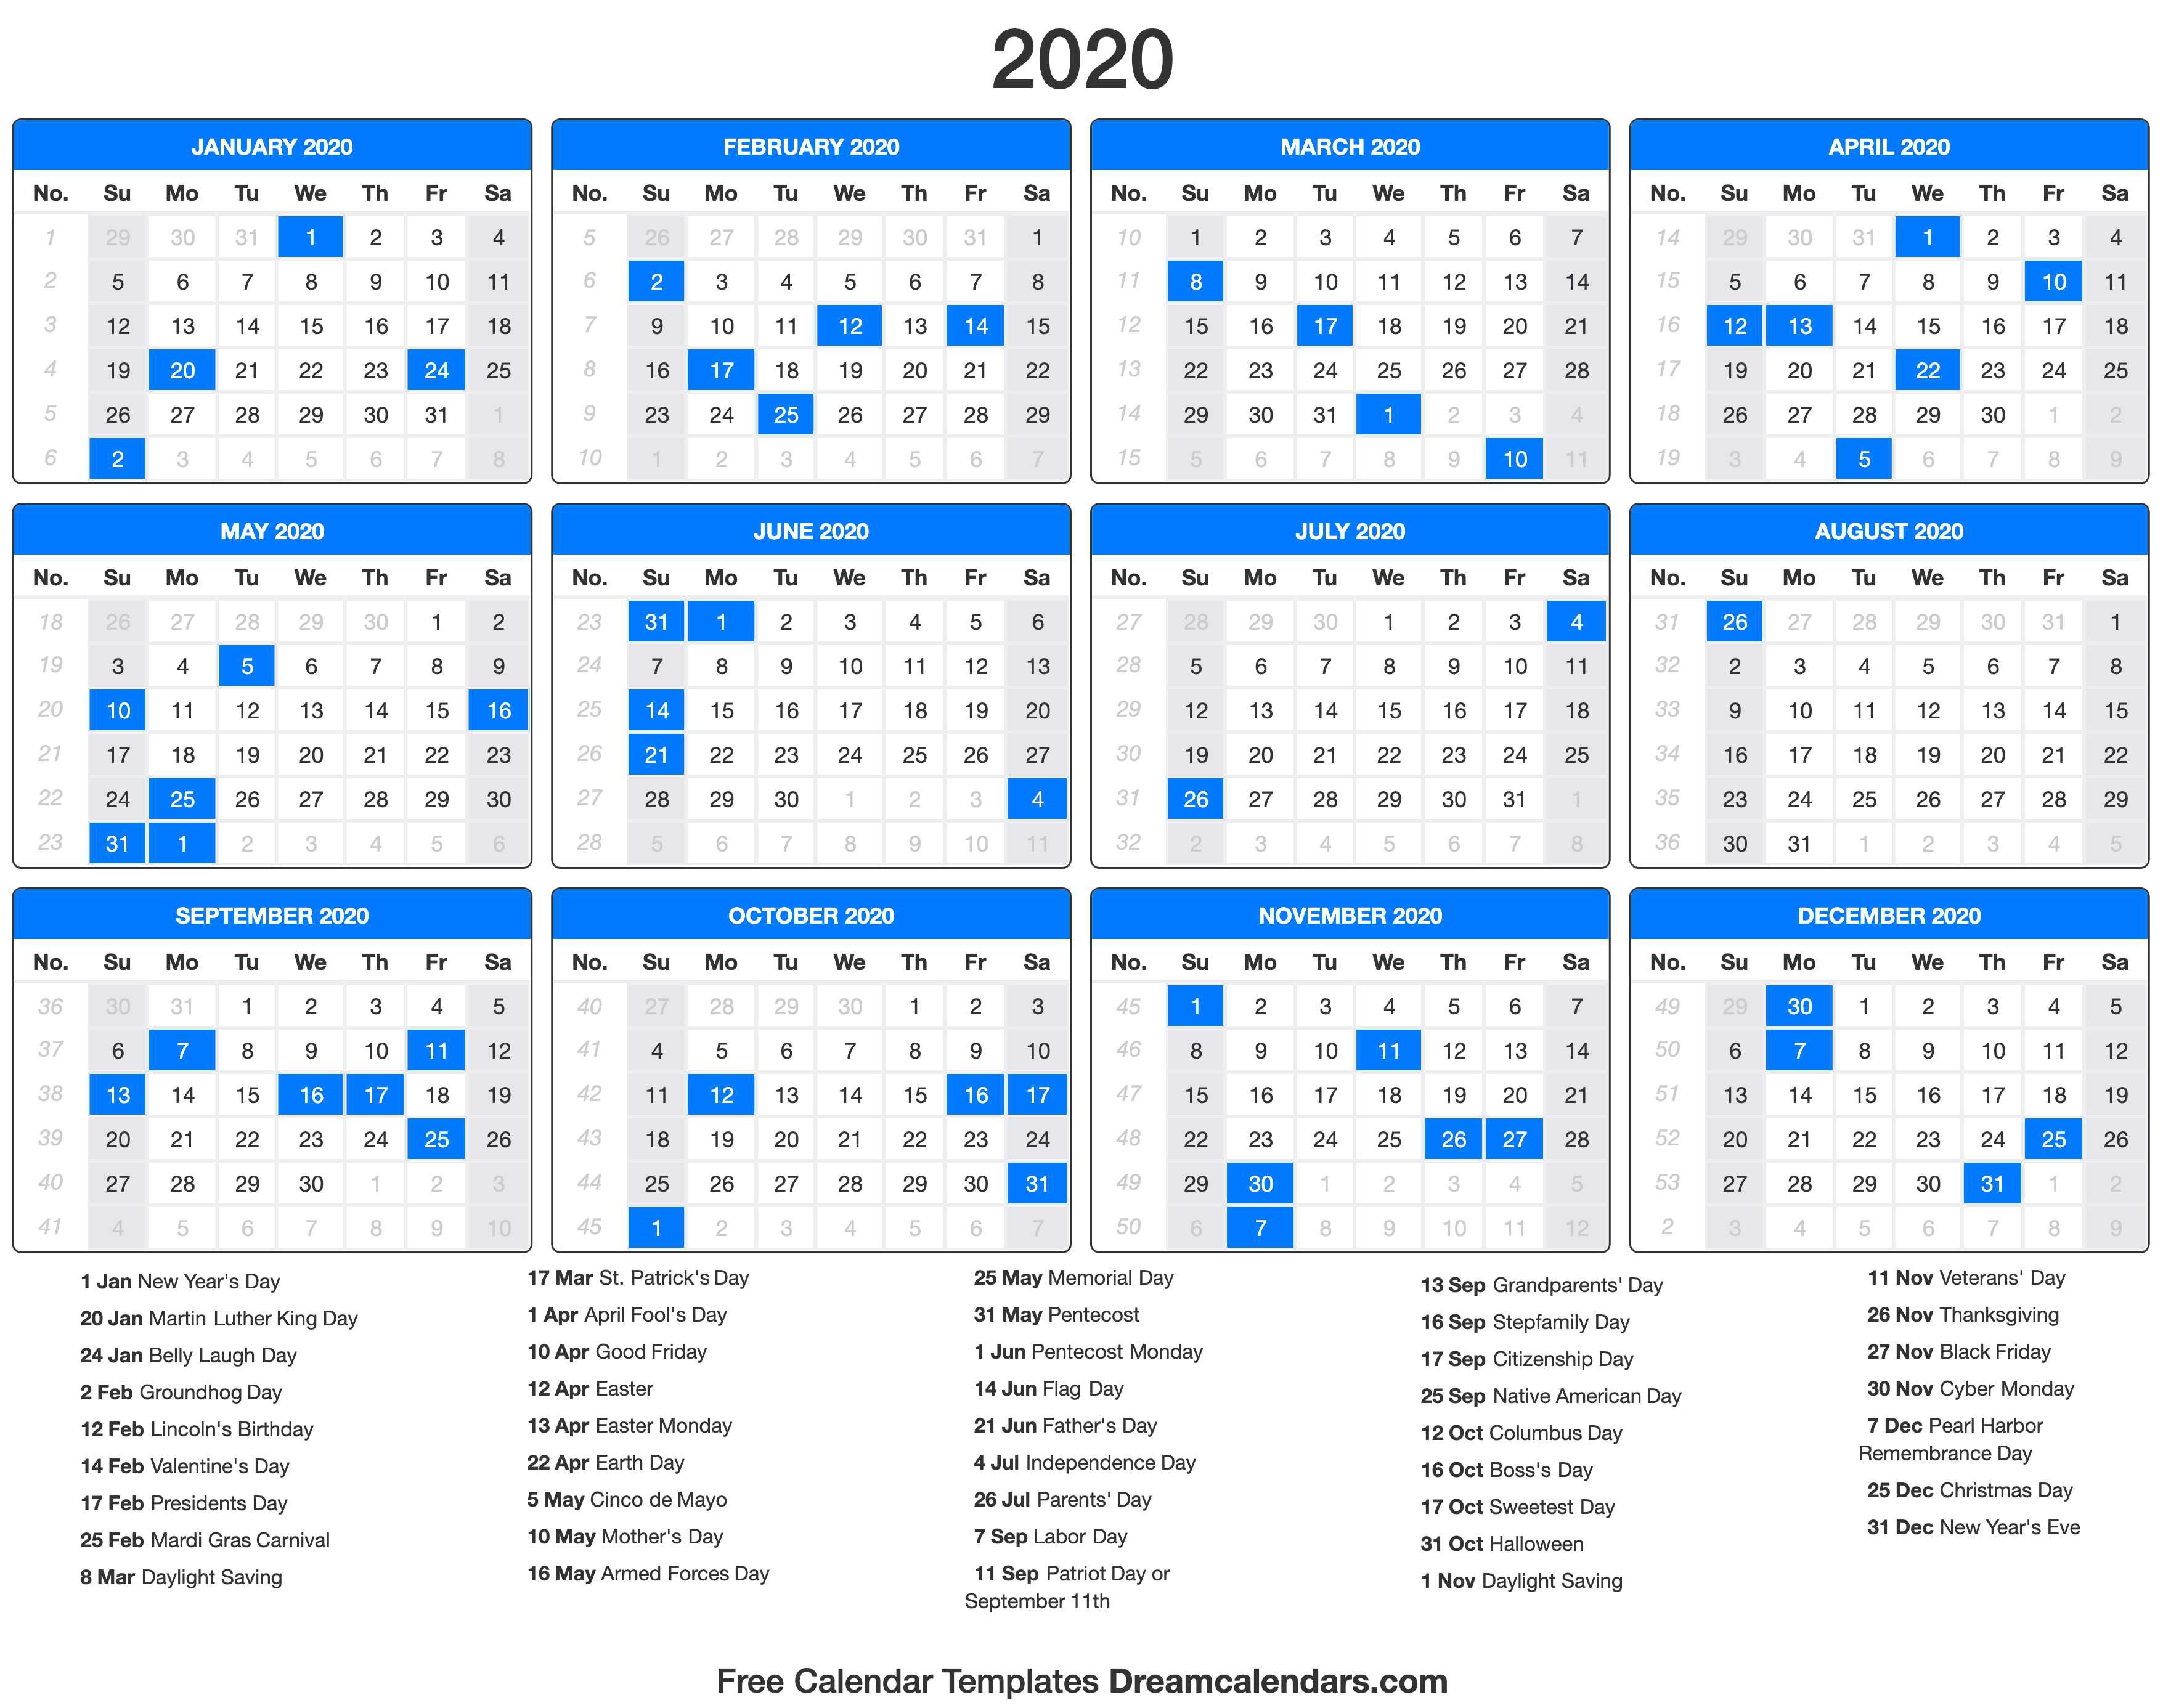 dream calendars make your calendar template blog 2019